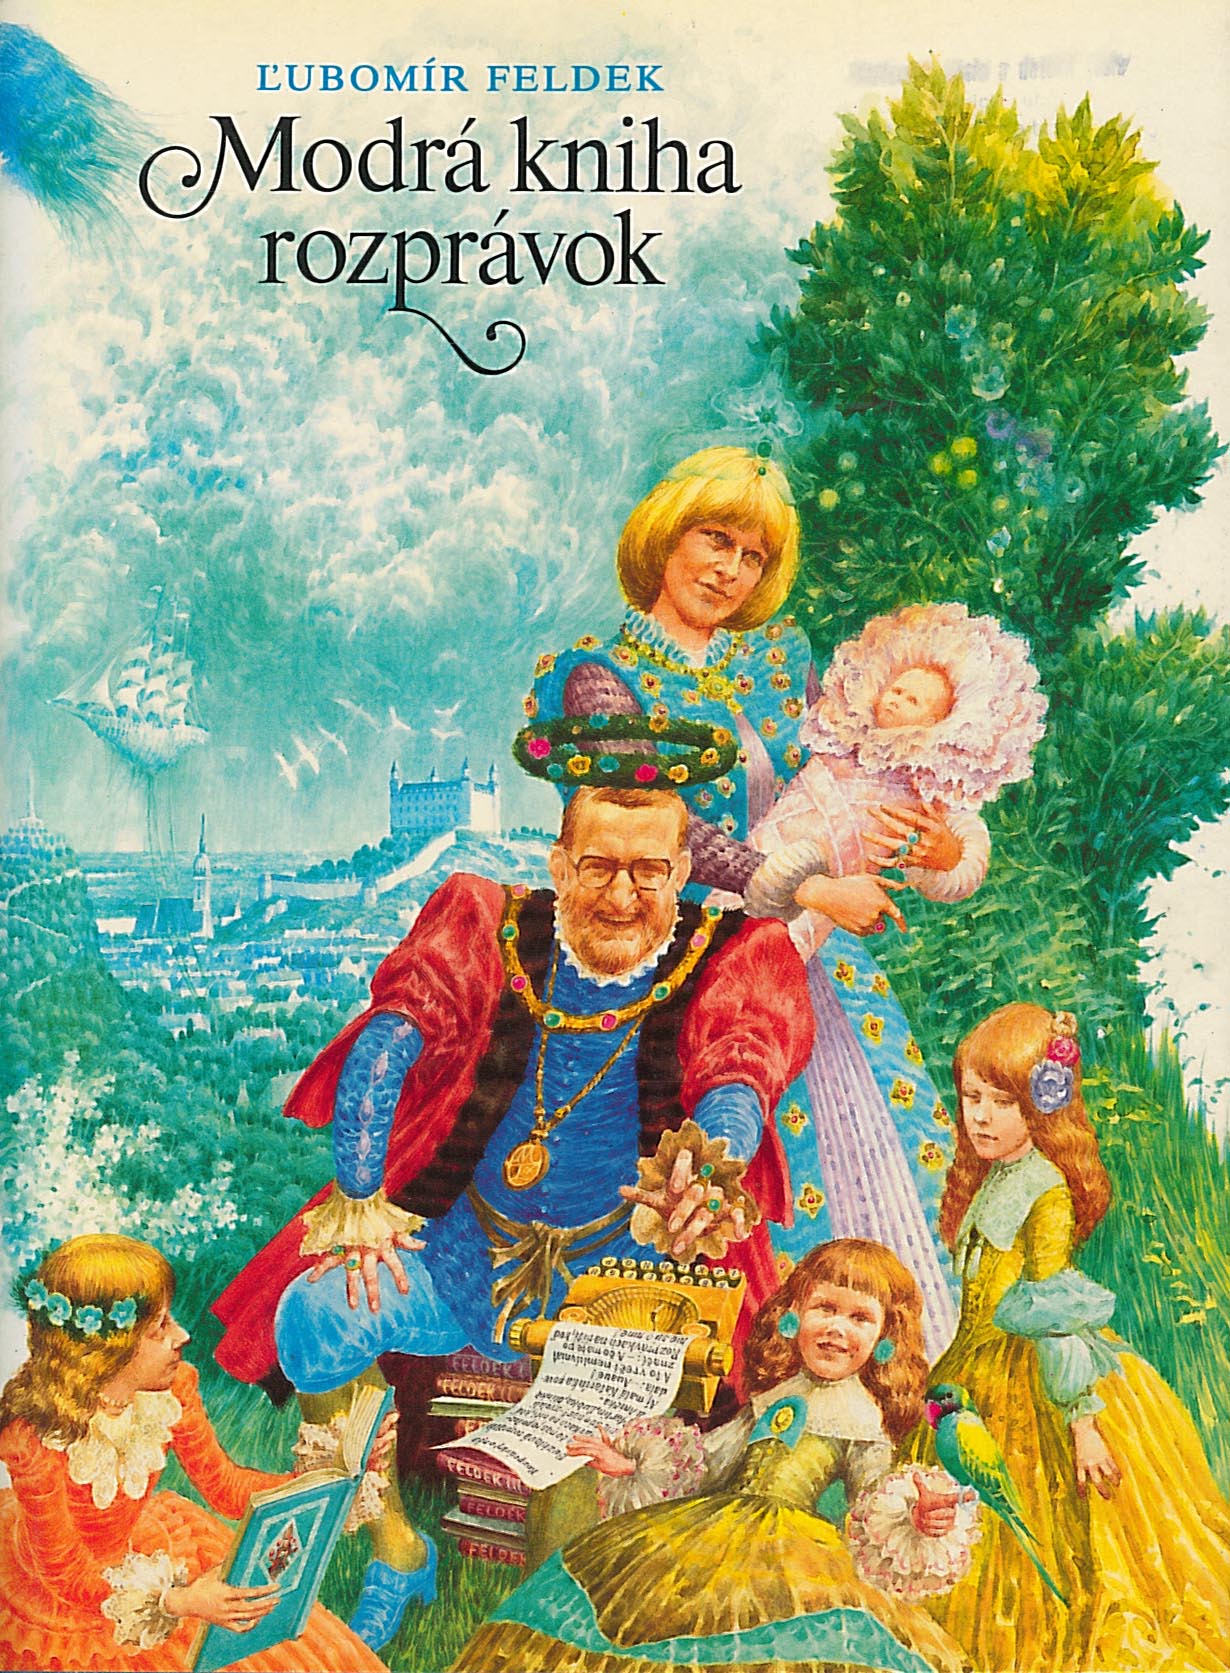 Modrá kniha rozprávok (Ľubomír Feldek)